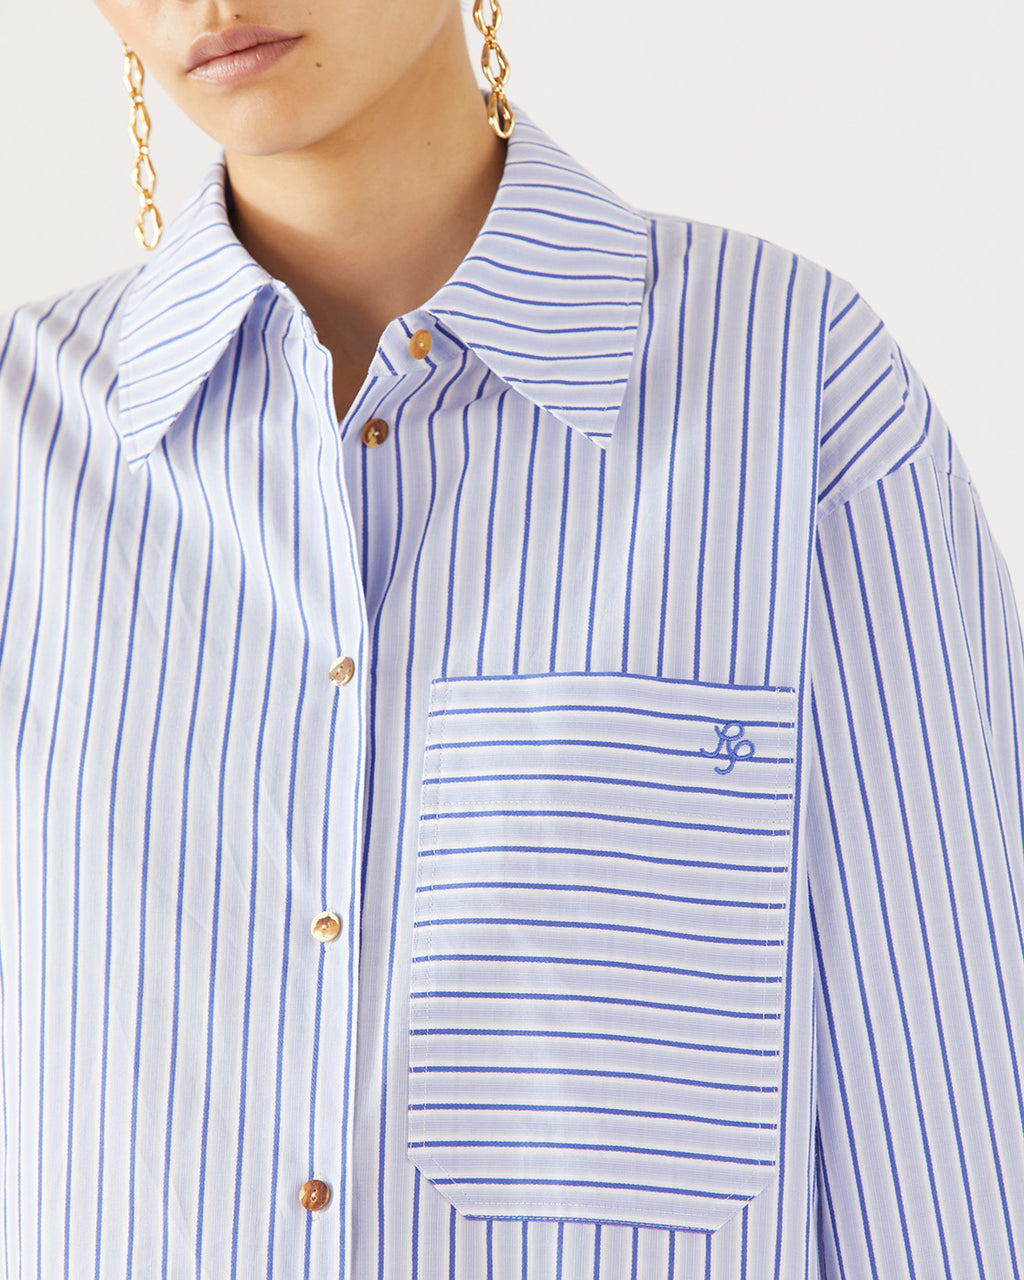 Caprice Shirt Cotton Stripe Blue